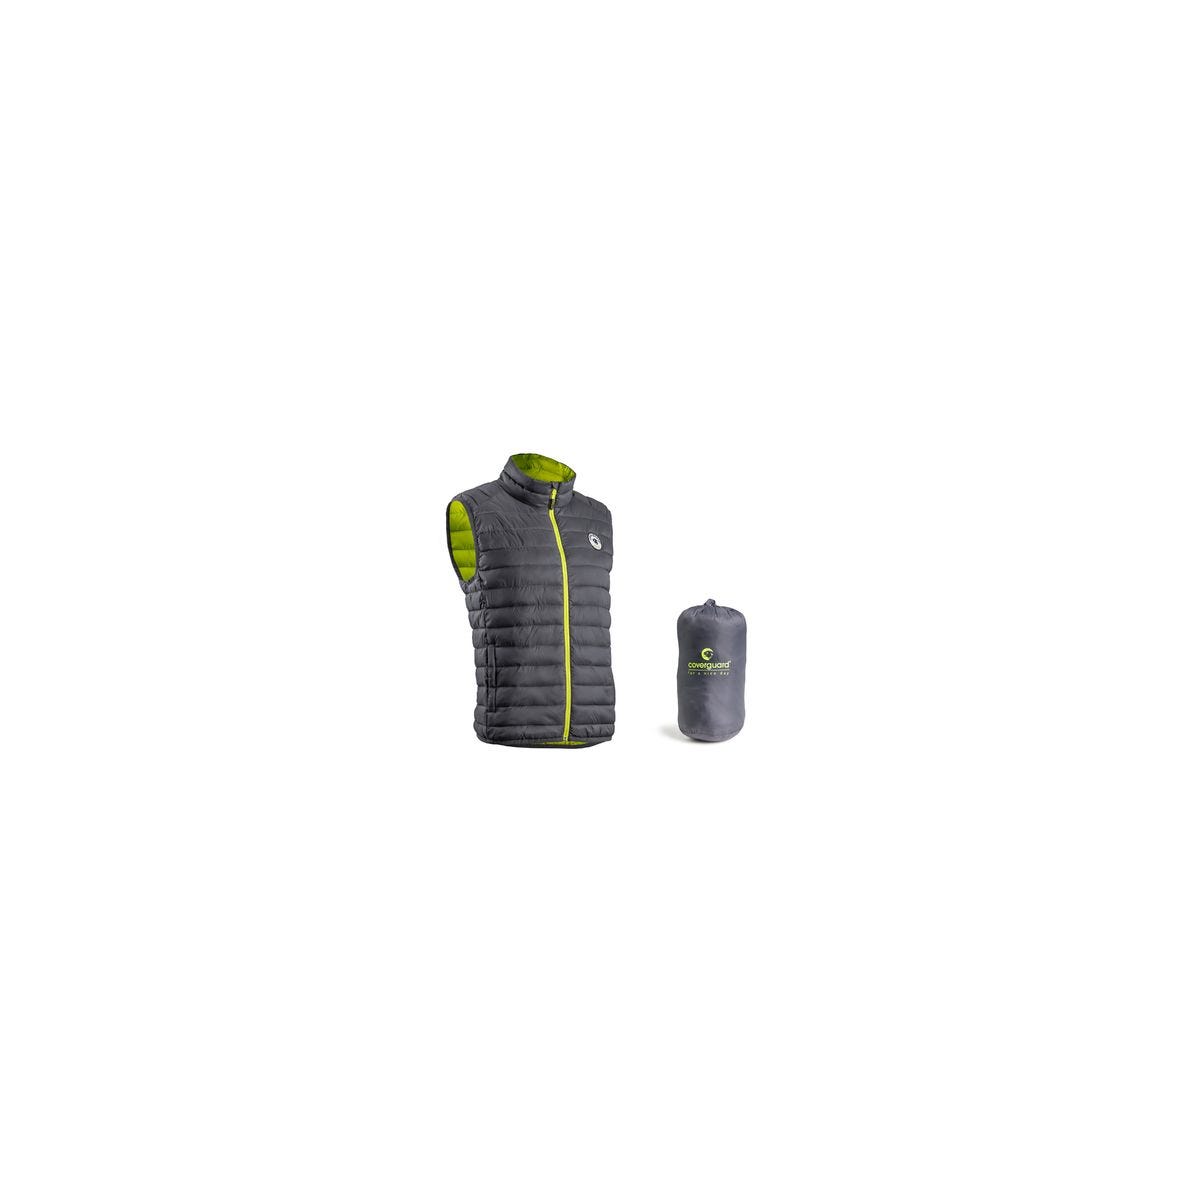 KUMA Gilet Froid gris/jaune, 100%PA + Matelassage 100g/m² - Coverguard - Taille 3XL 0